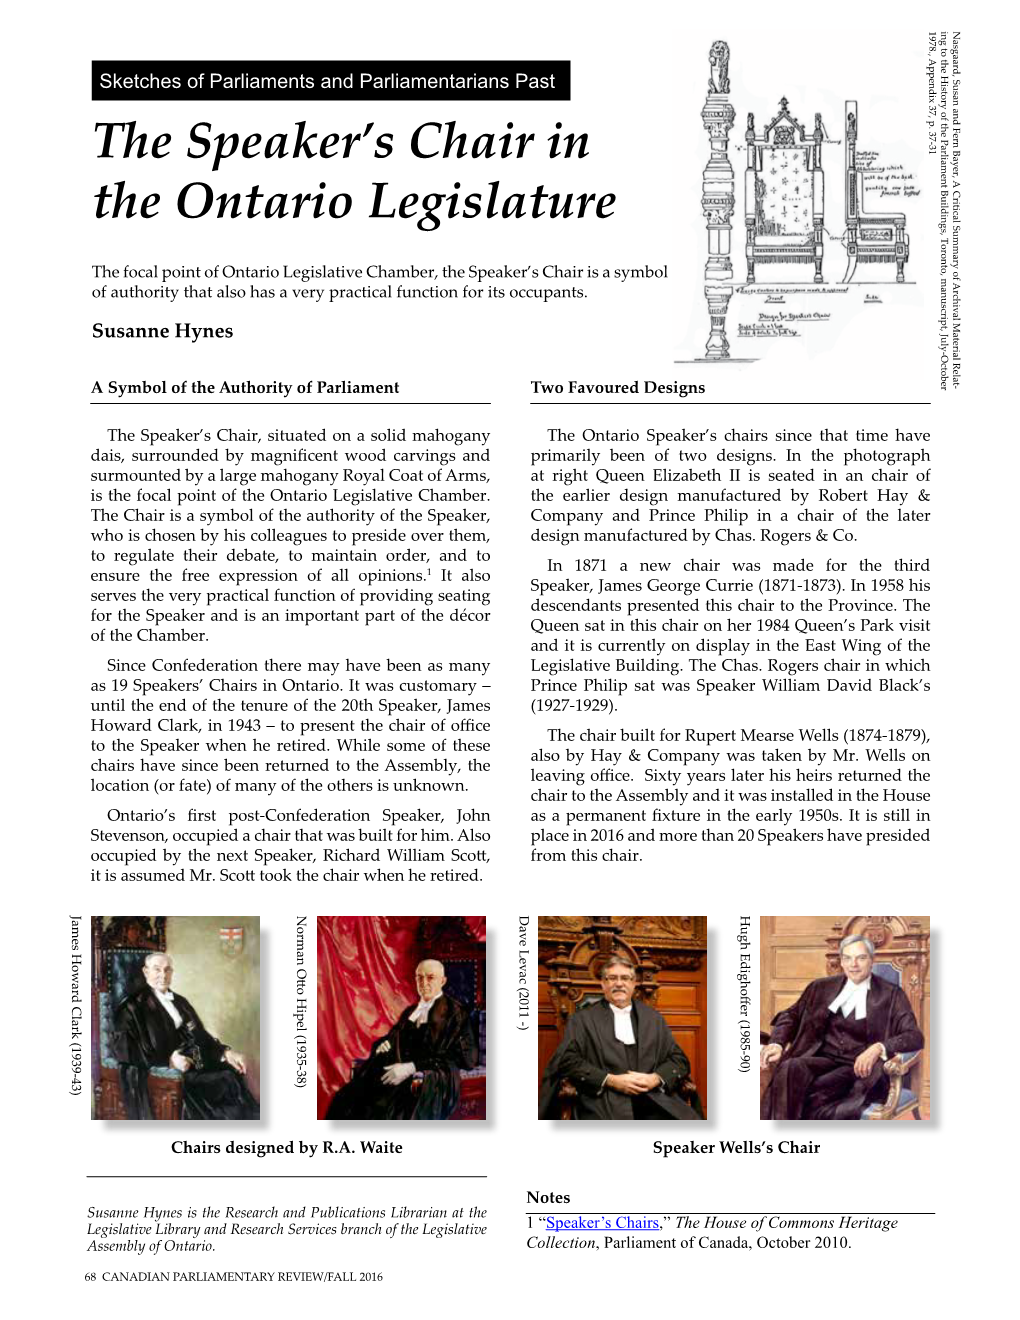 The Speaker's Chair in the Ontario Legislature